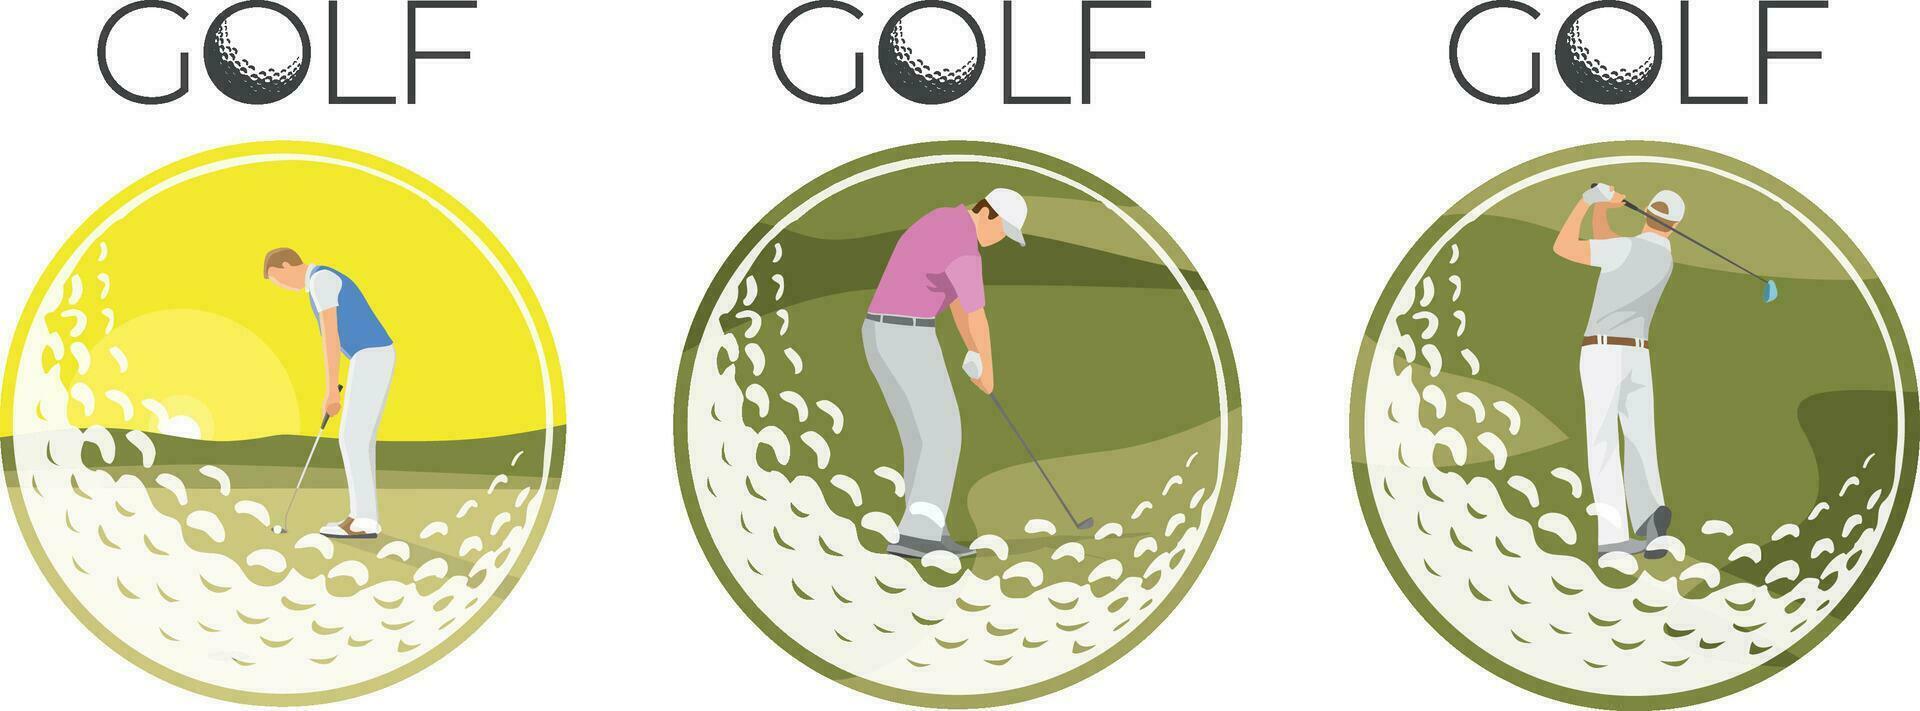 Golfer action in golf ball frame. Vector illustration.